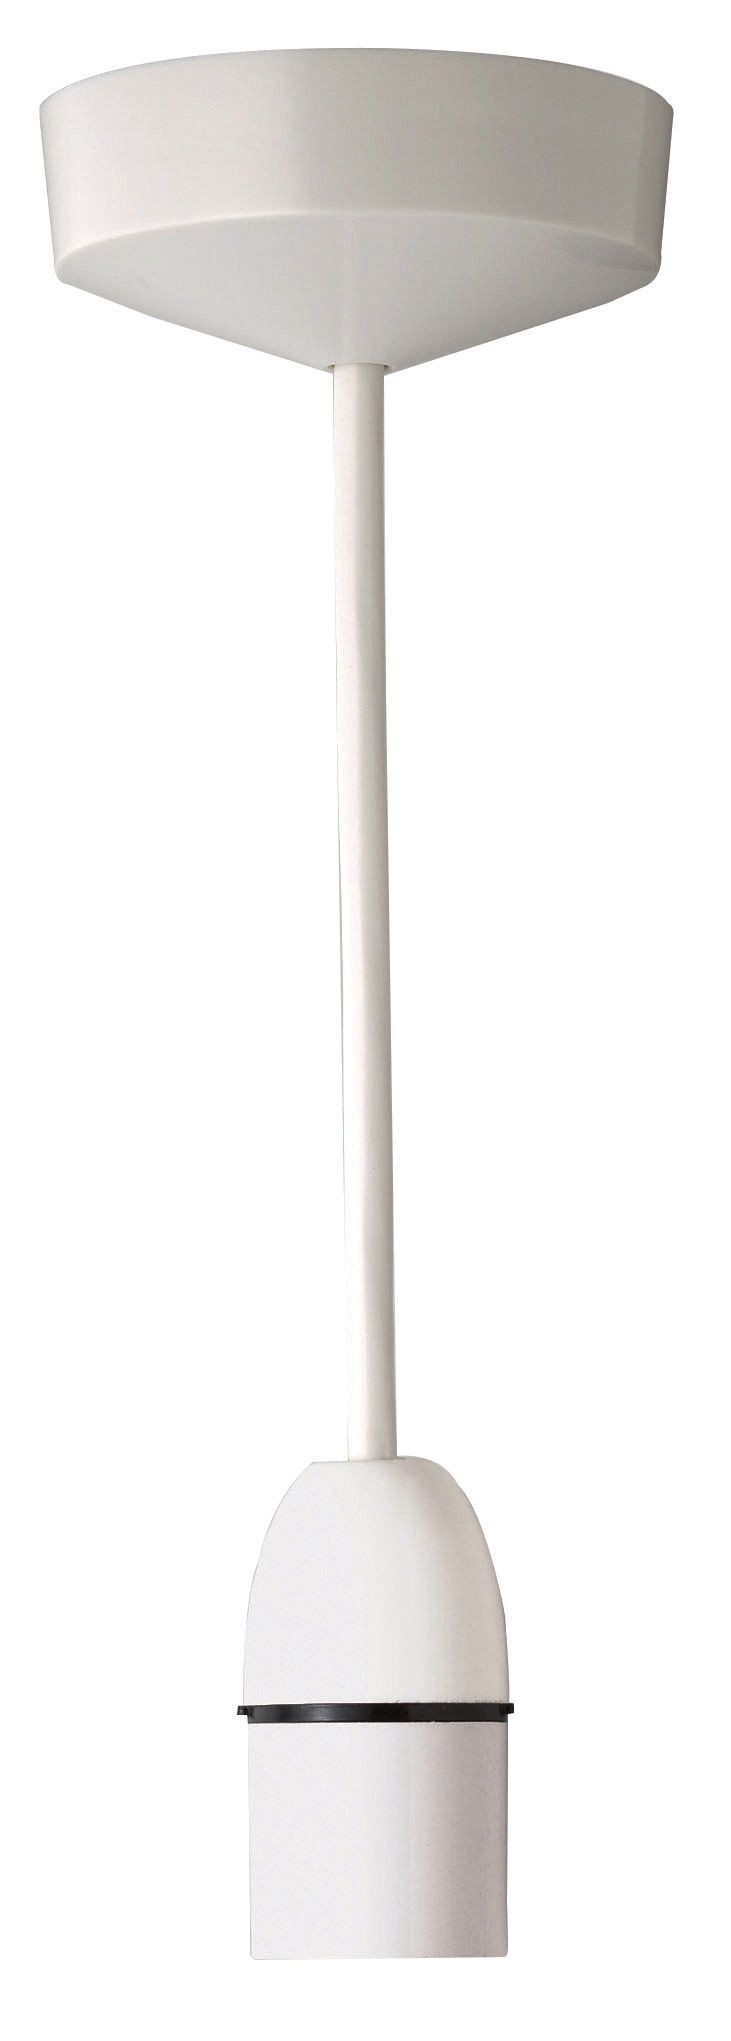 Image of MK Pendant Set - White 150mm